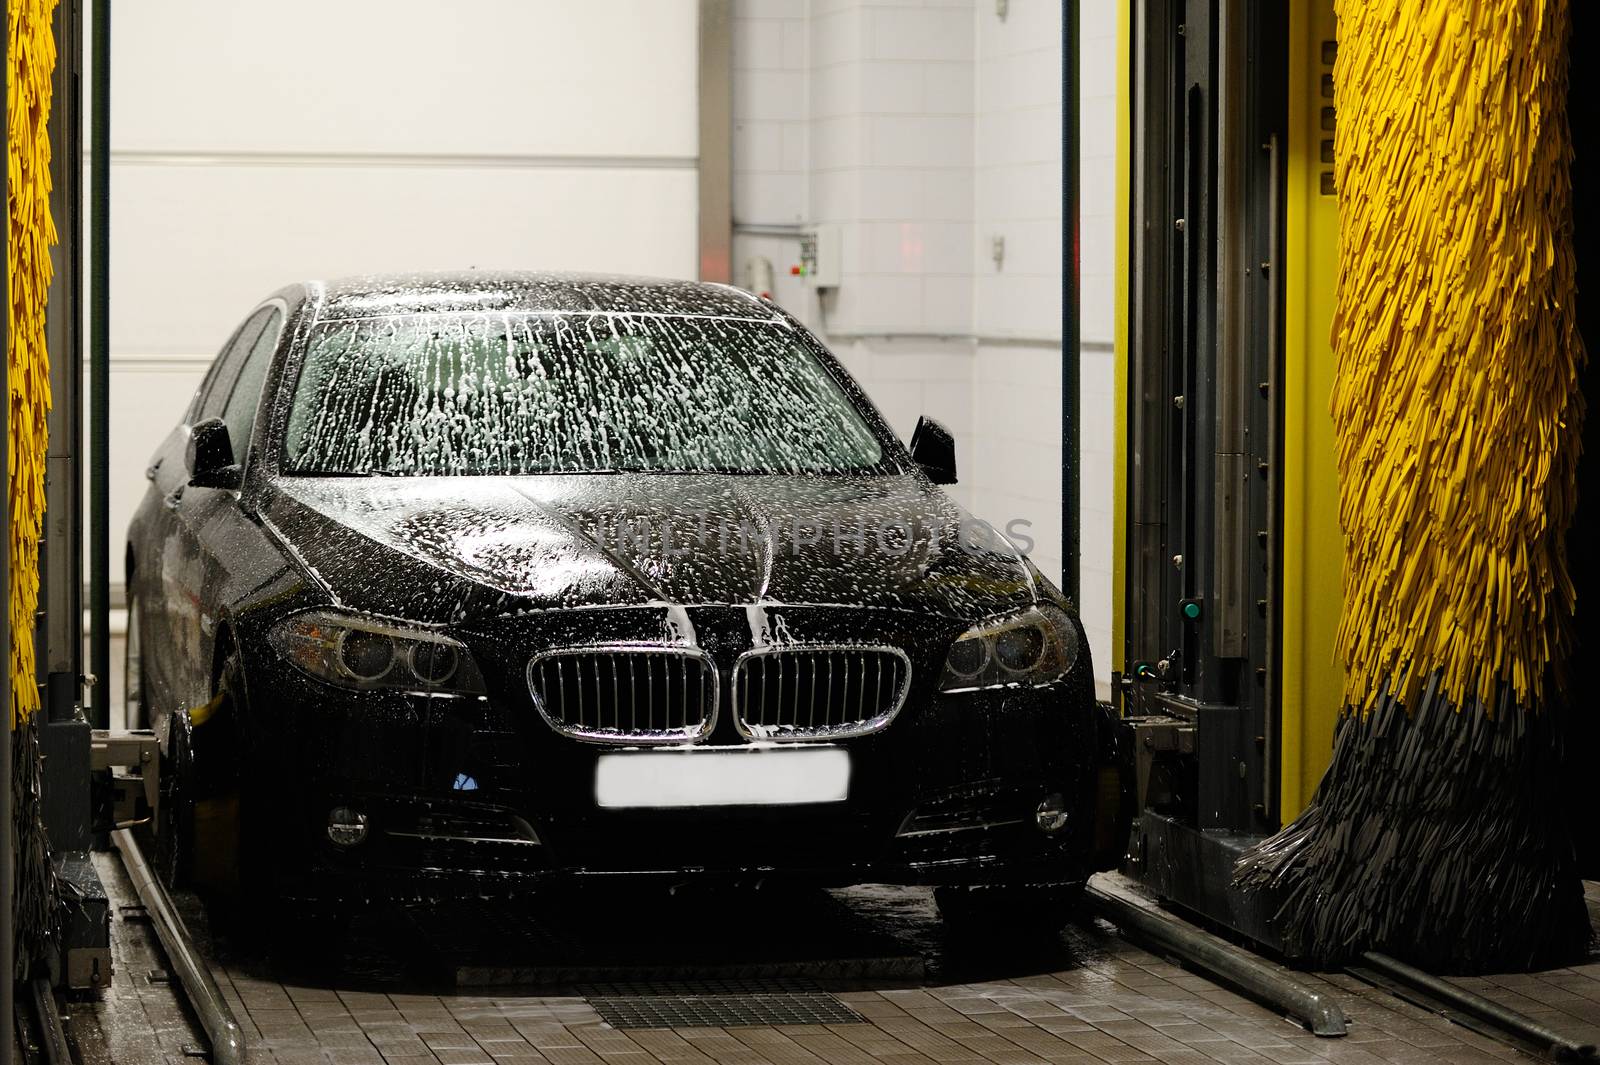 Black car washing in station washing tunnel